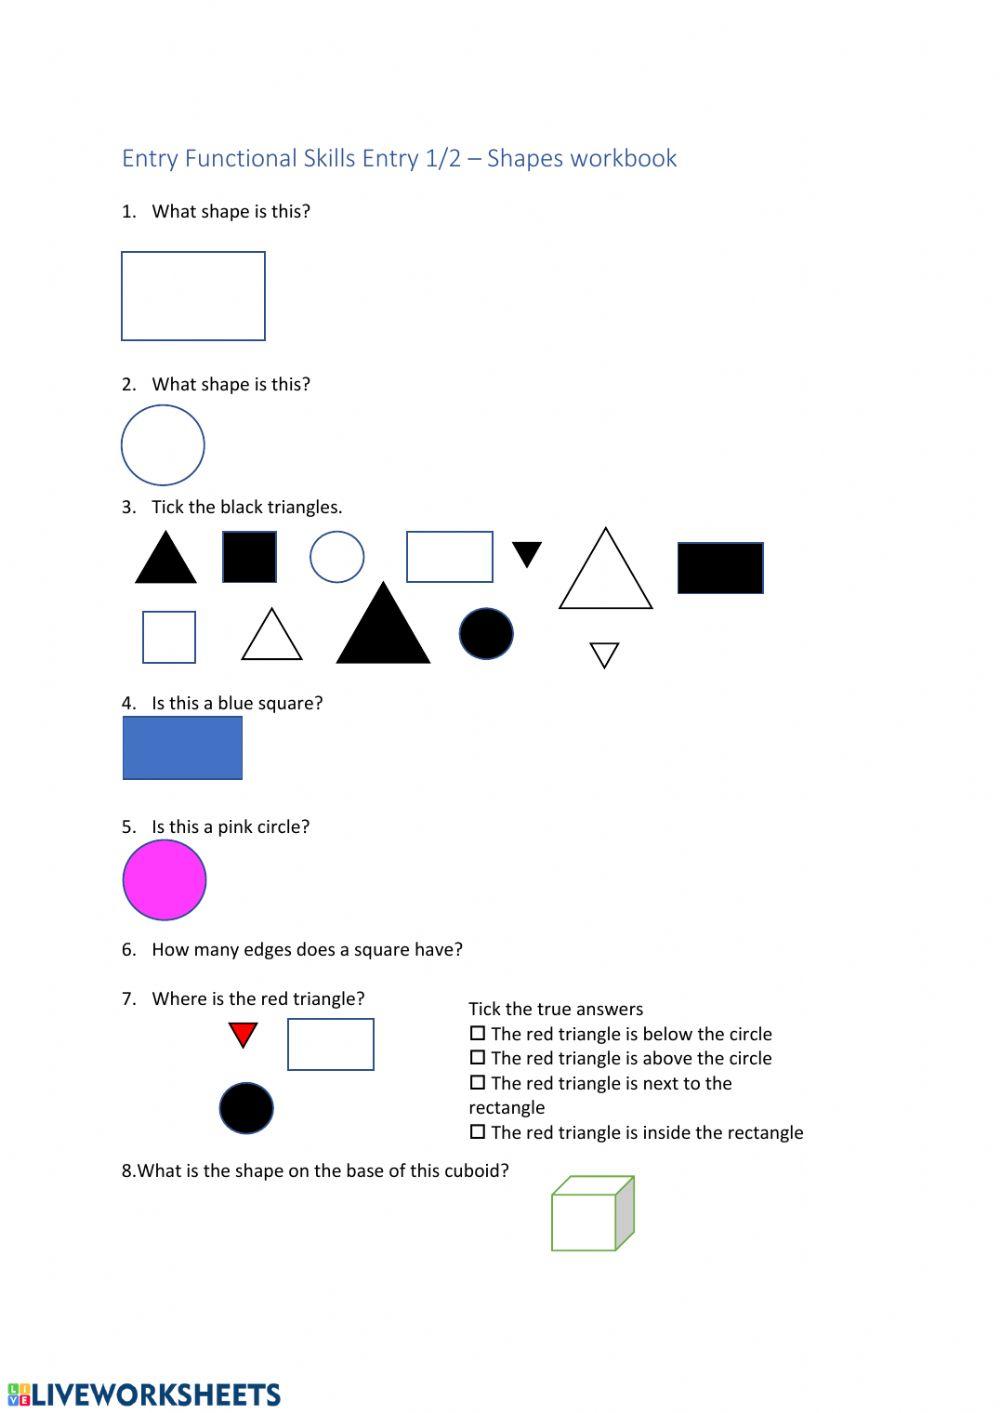 Entry 1 -2 FS Maths - 2D shapes